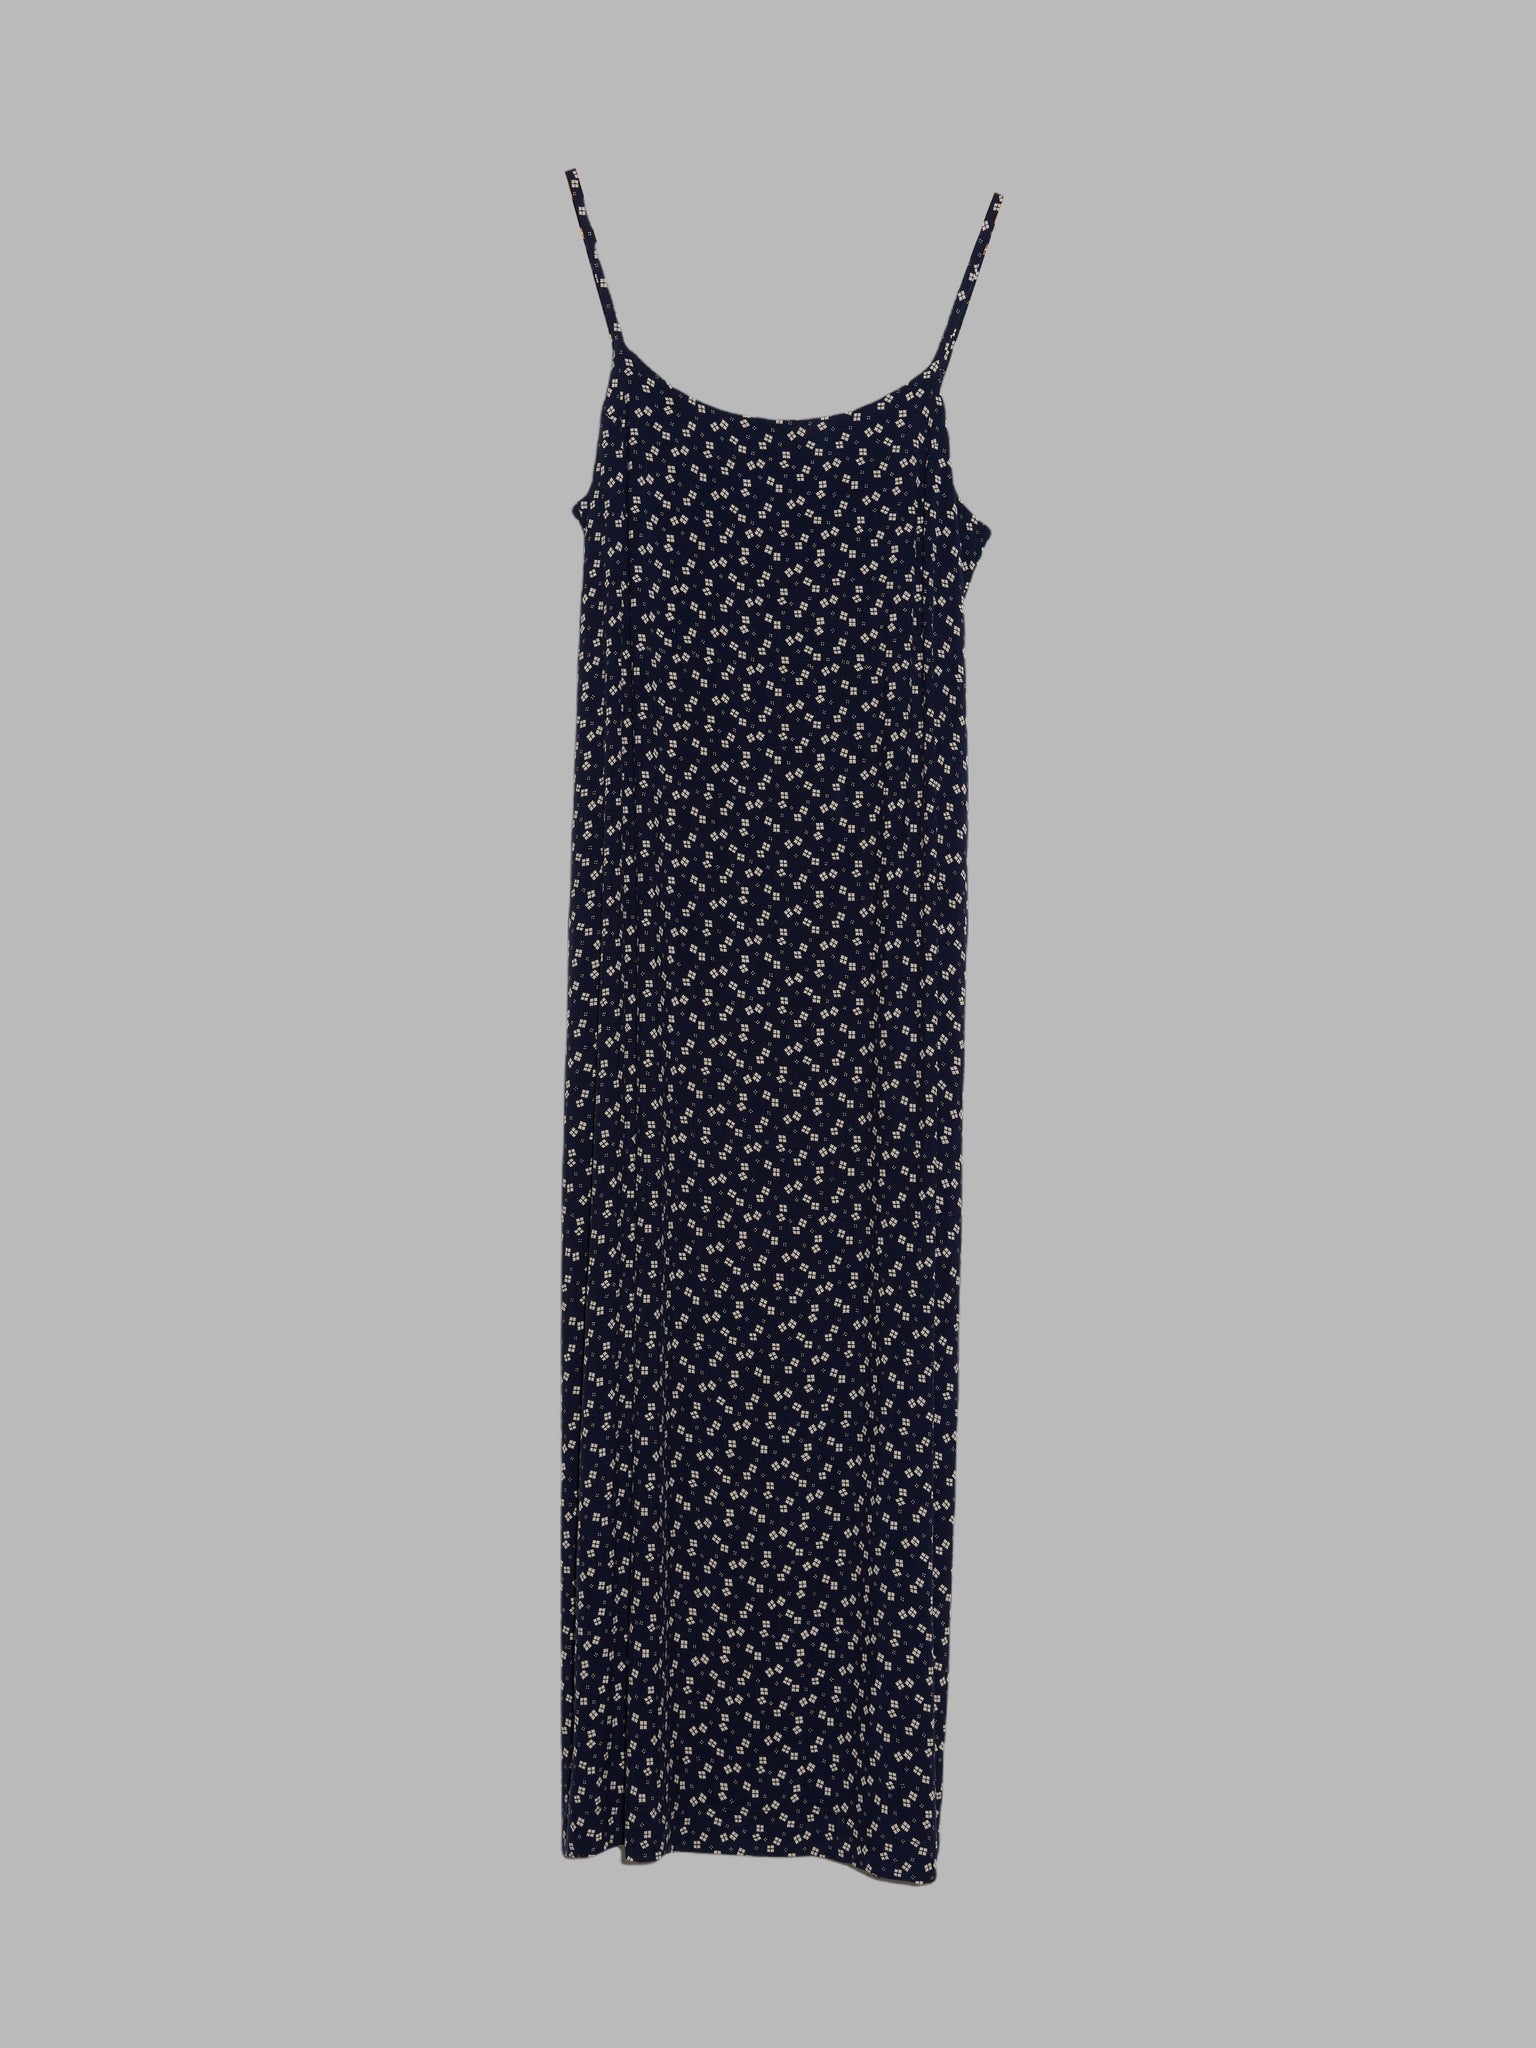 Robe de Chambre Comme des Garcons 1992 navy rayon square pattern camisole dress